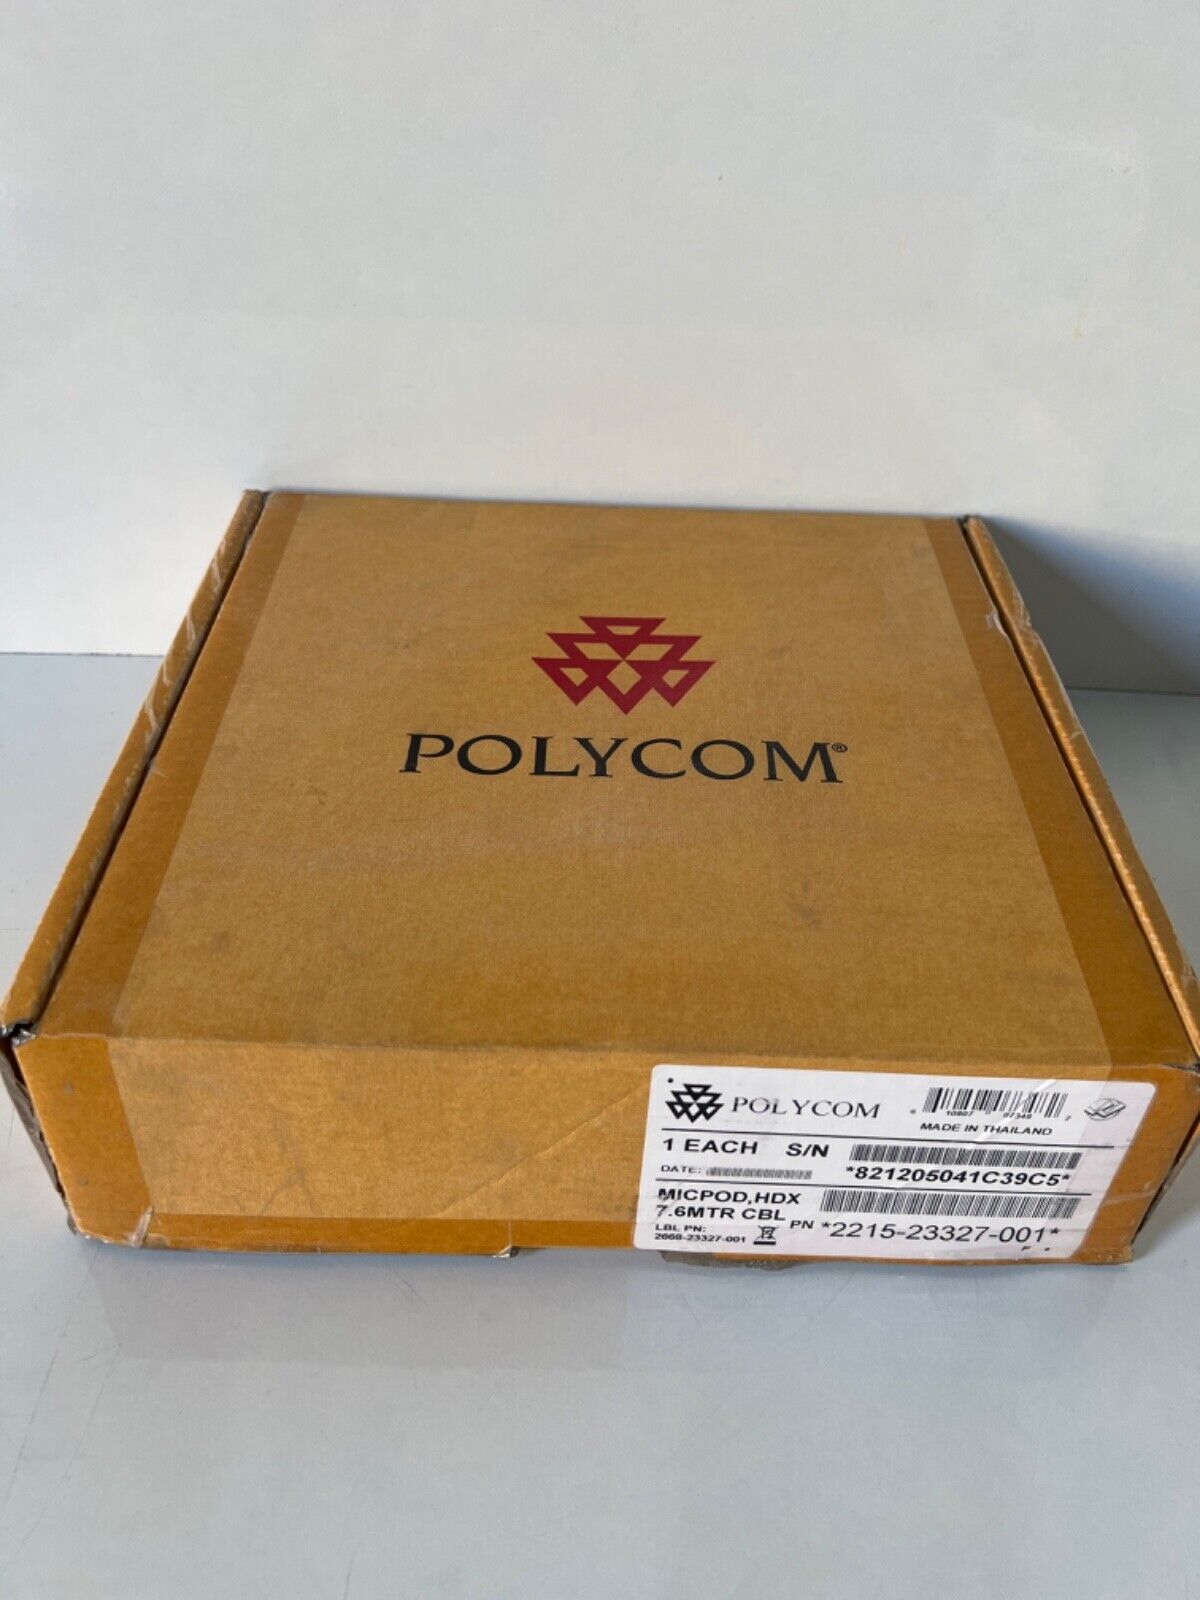 NEW MICRO POLYCOM 2215-23327-001 MICPOD HDX 7.6MTR CBL